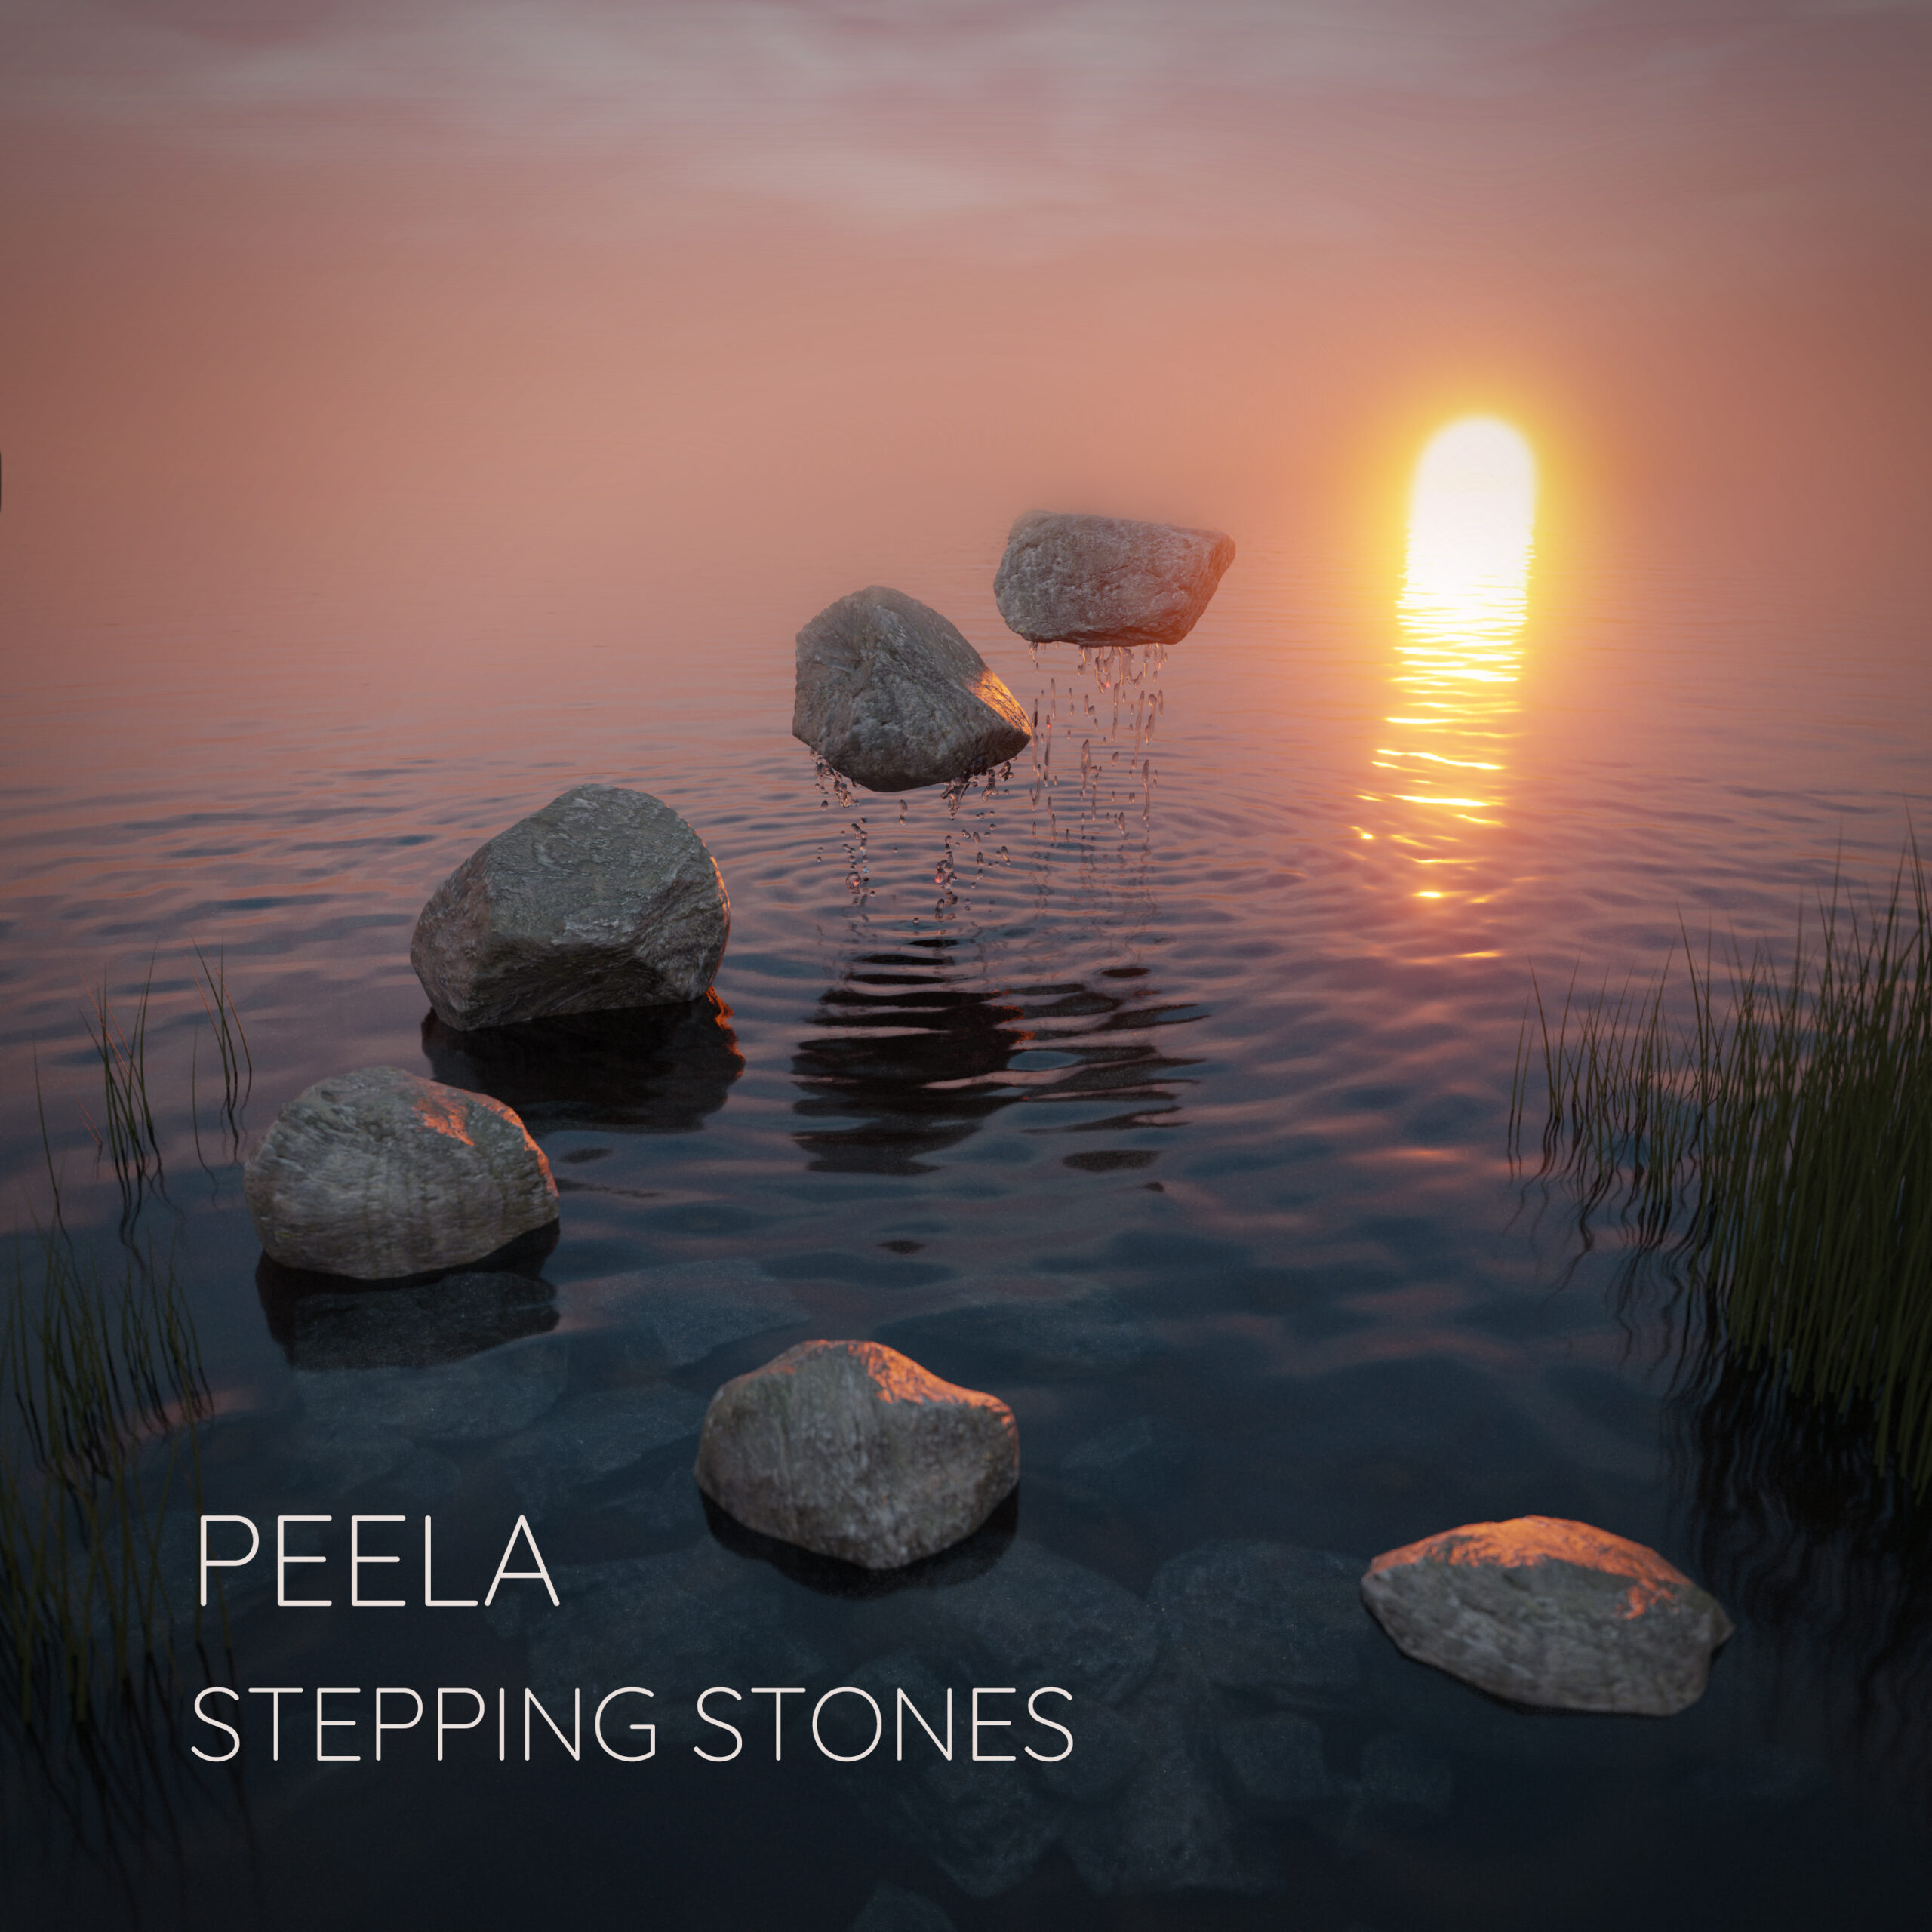 Peela’s Album Release Gig Was a Groovy Sensory Feast